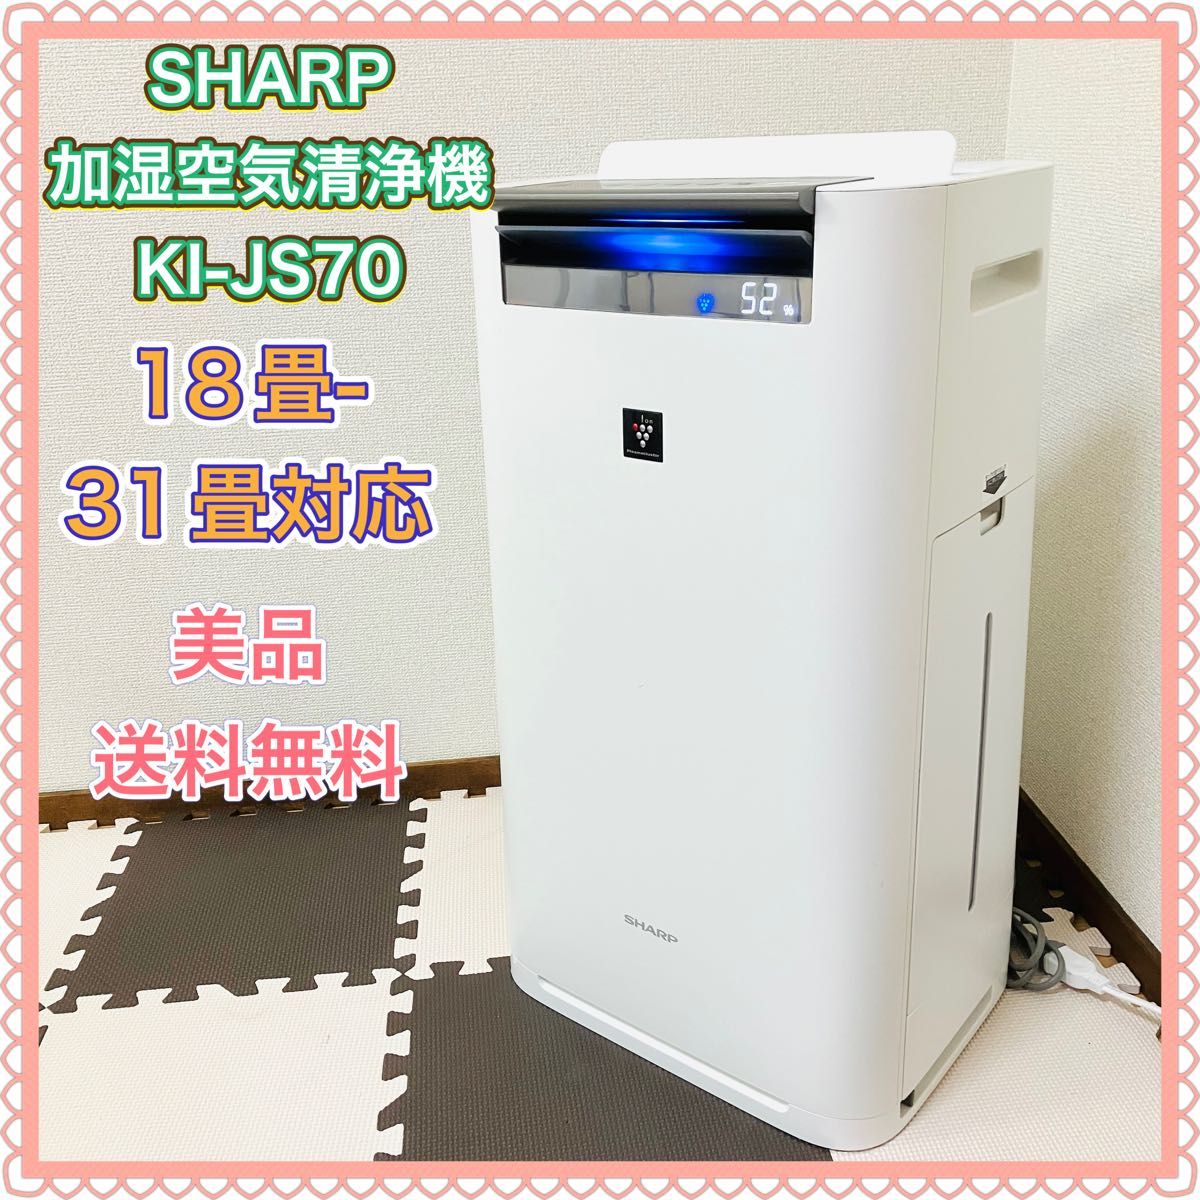 SHARP シャープ KI-JS70-W 加湿空気清浄機 プラズマクラスター 16畳 31